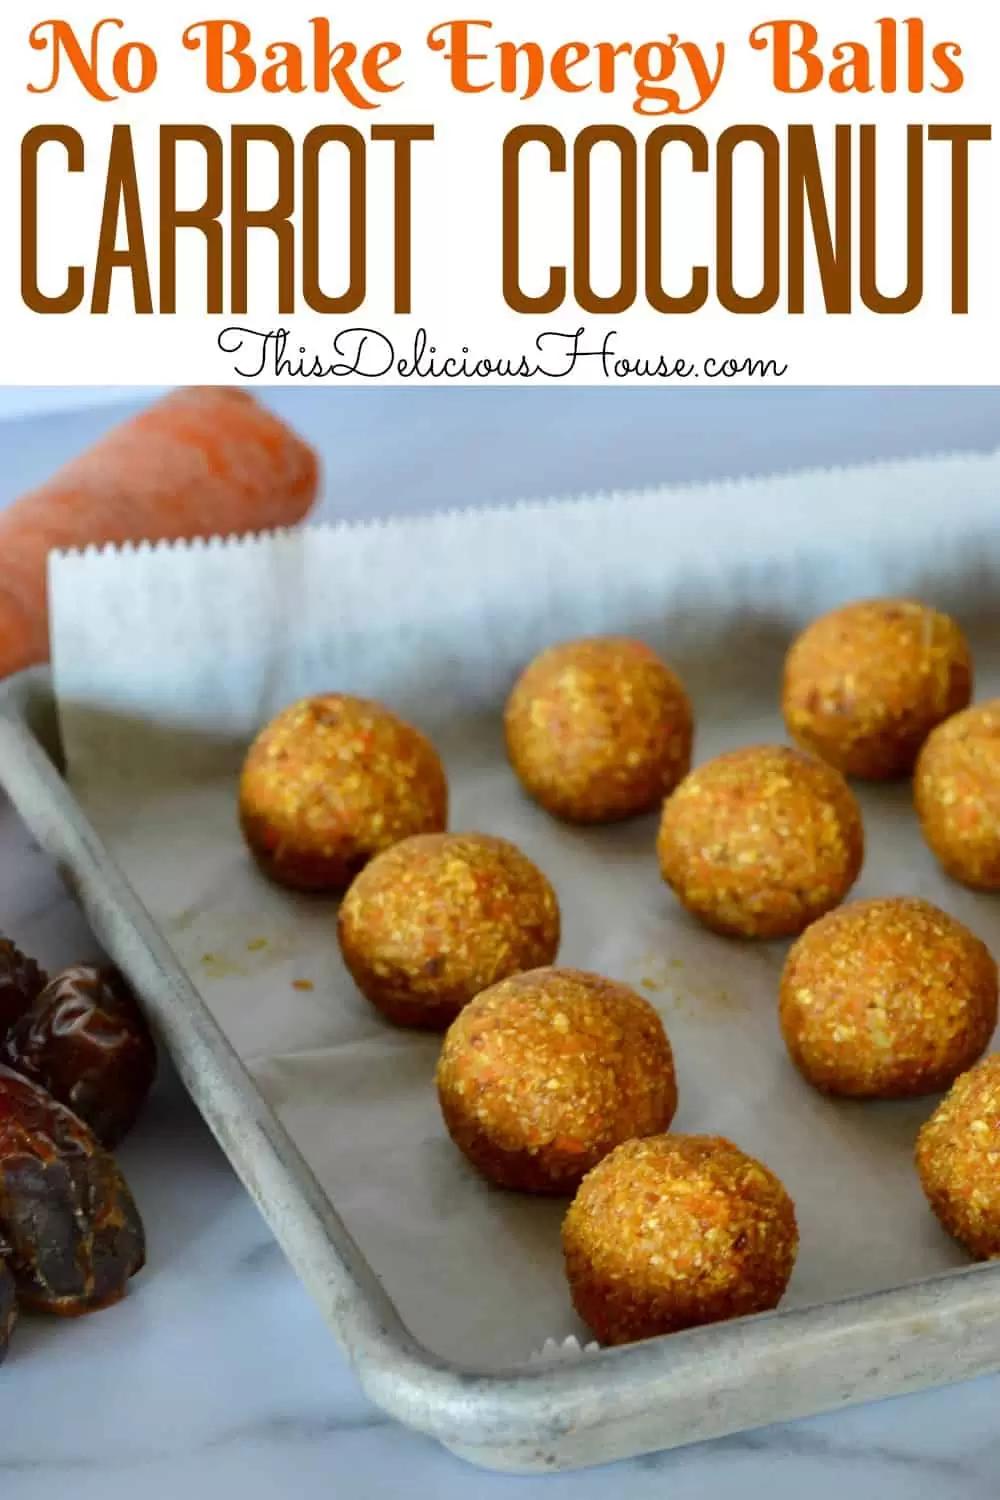 carrot coconut energy balls